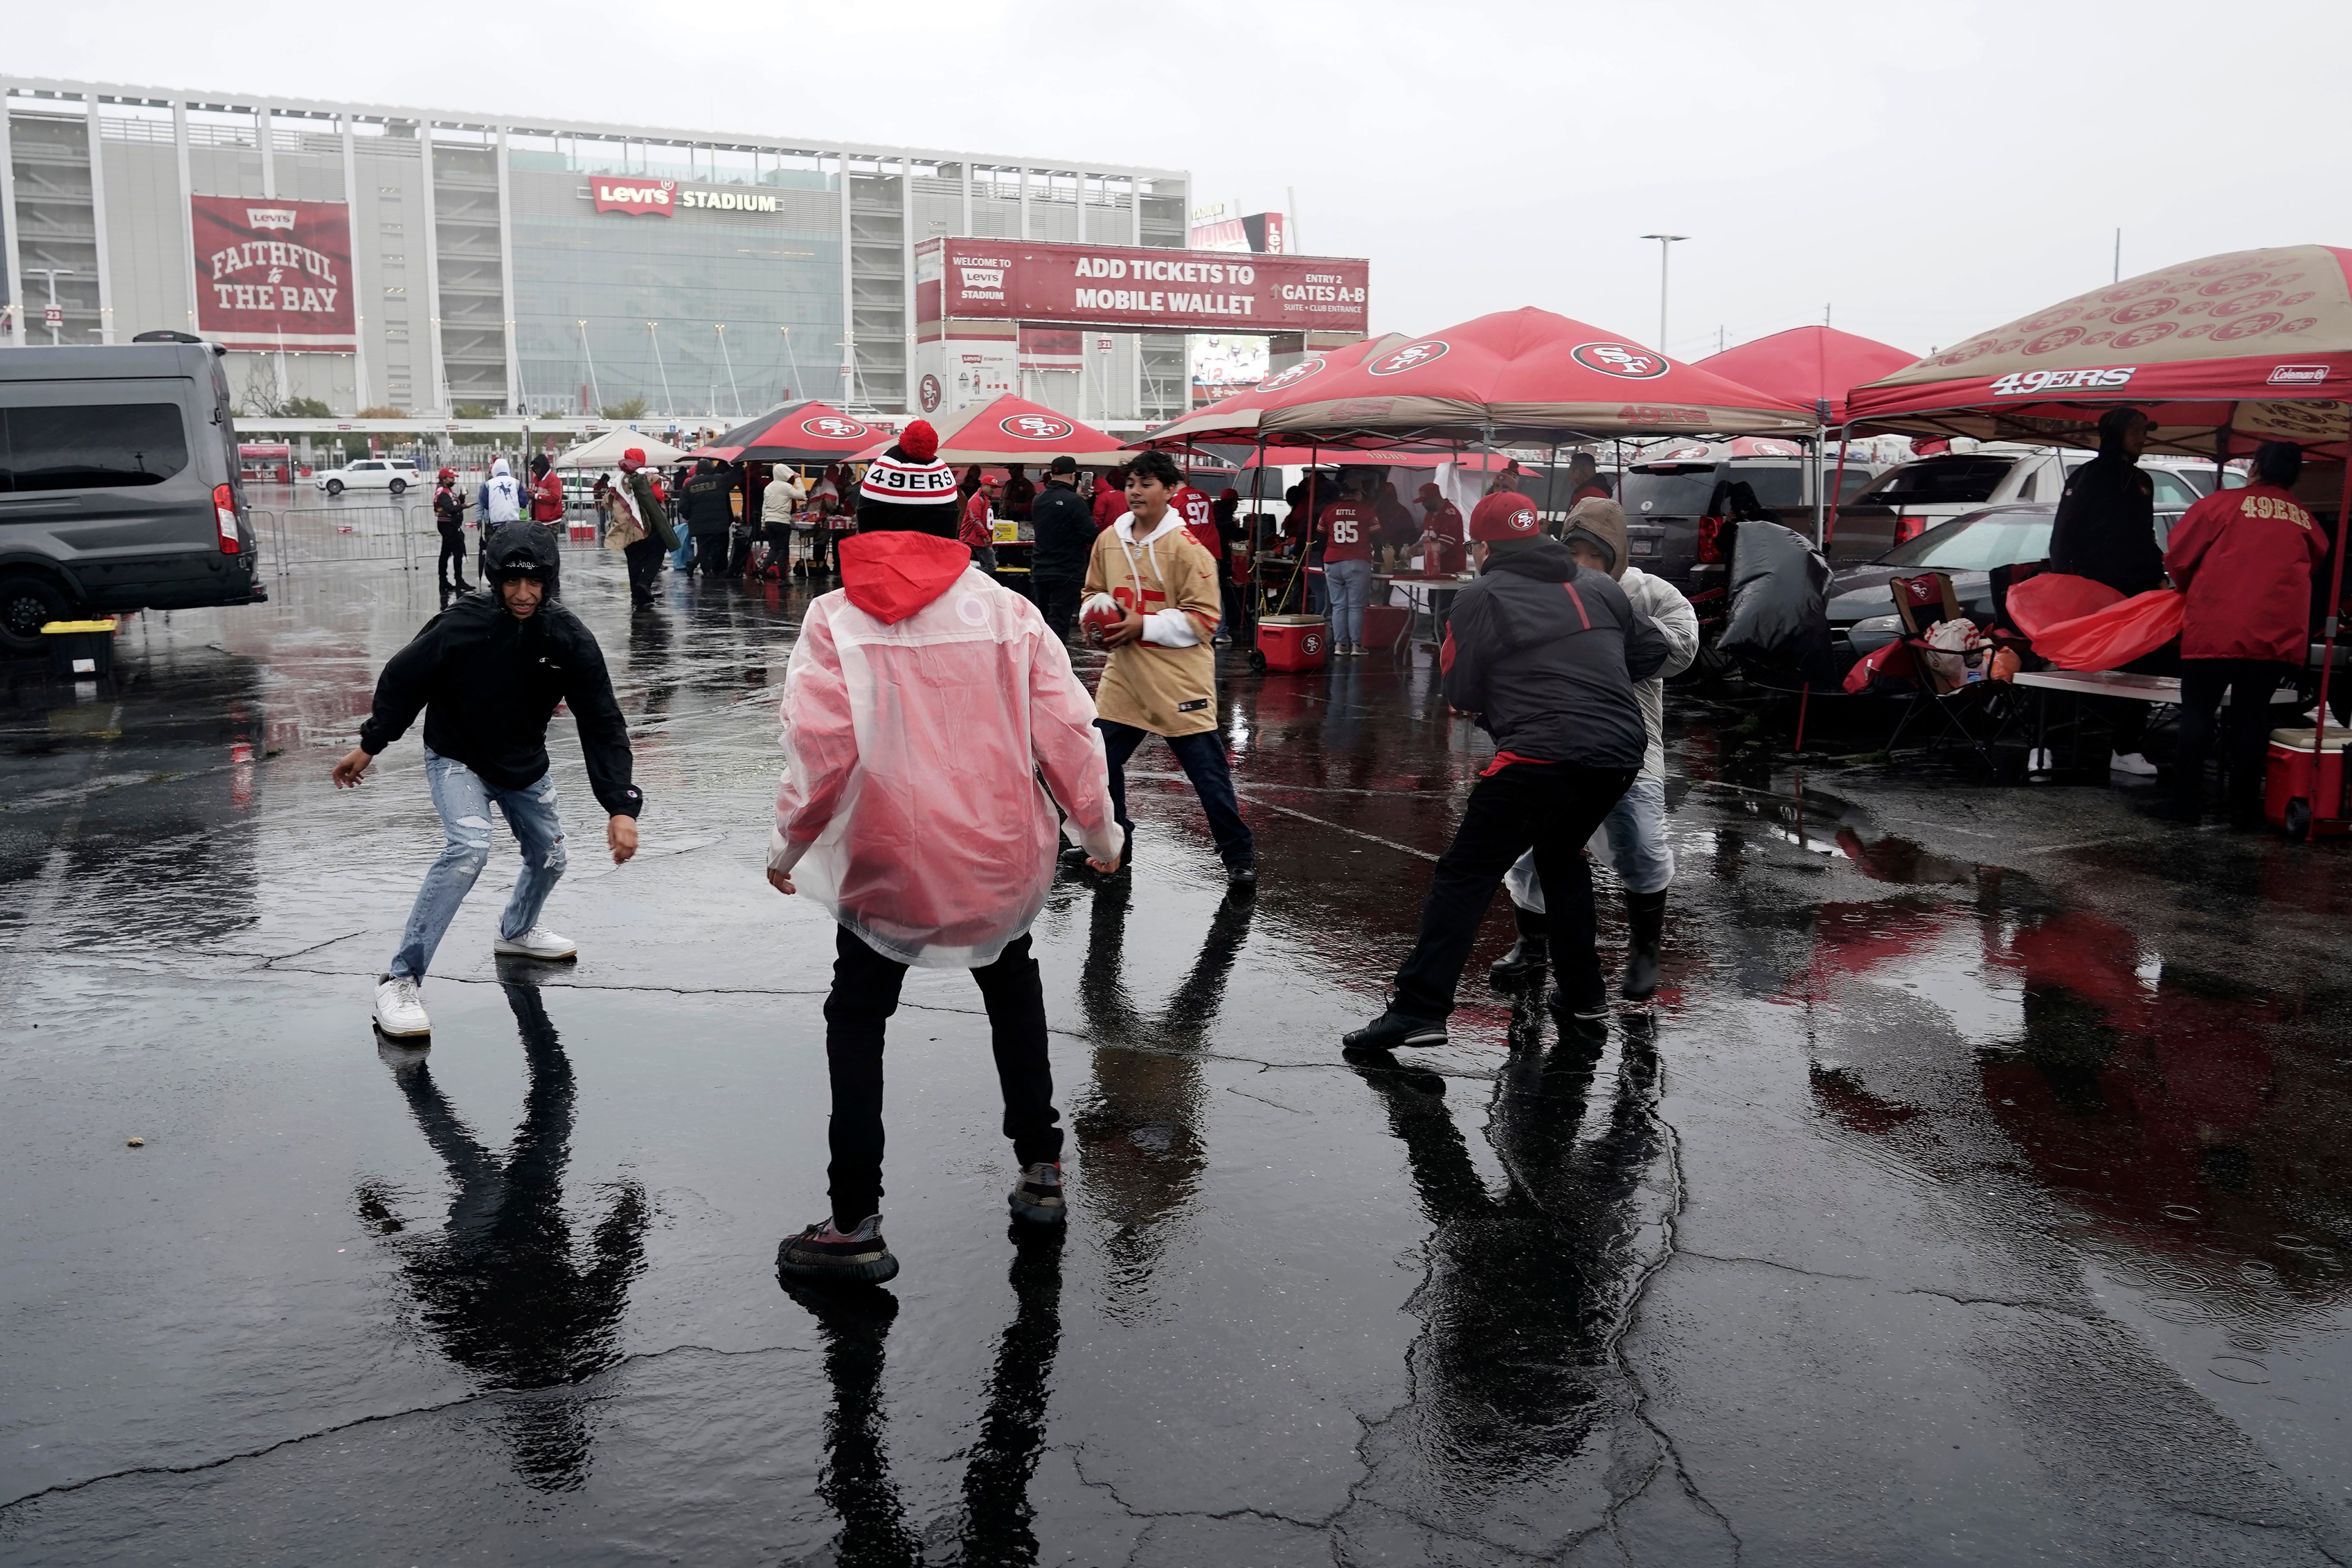 Fans walk in wet weather outside a staidum